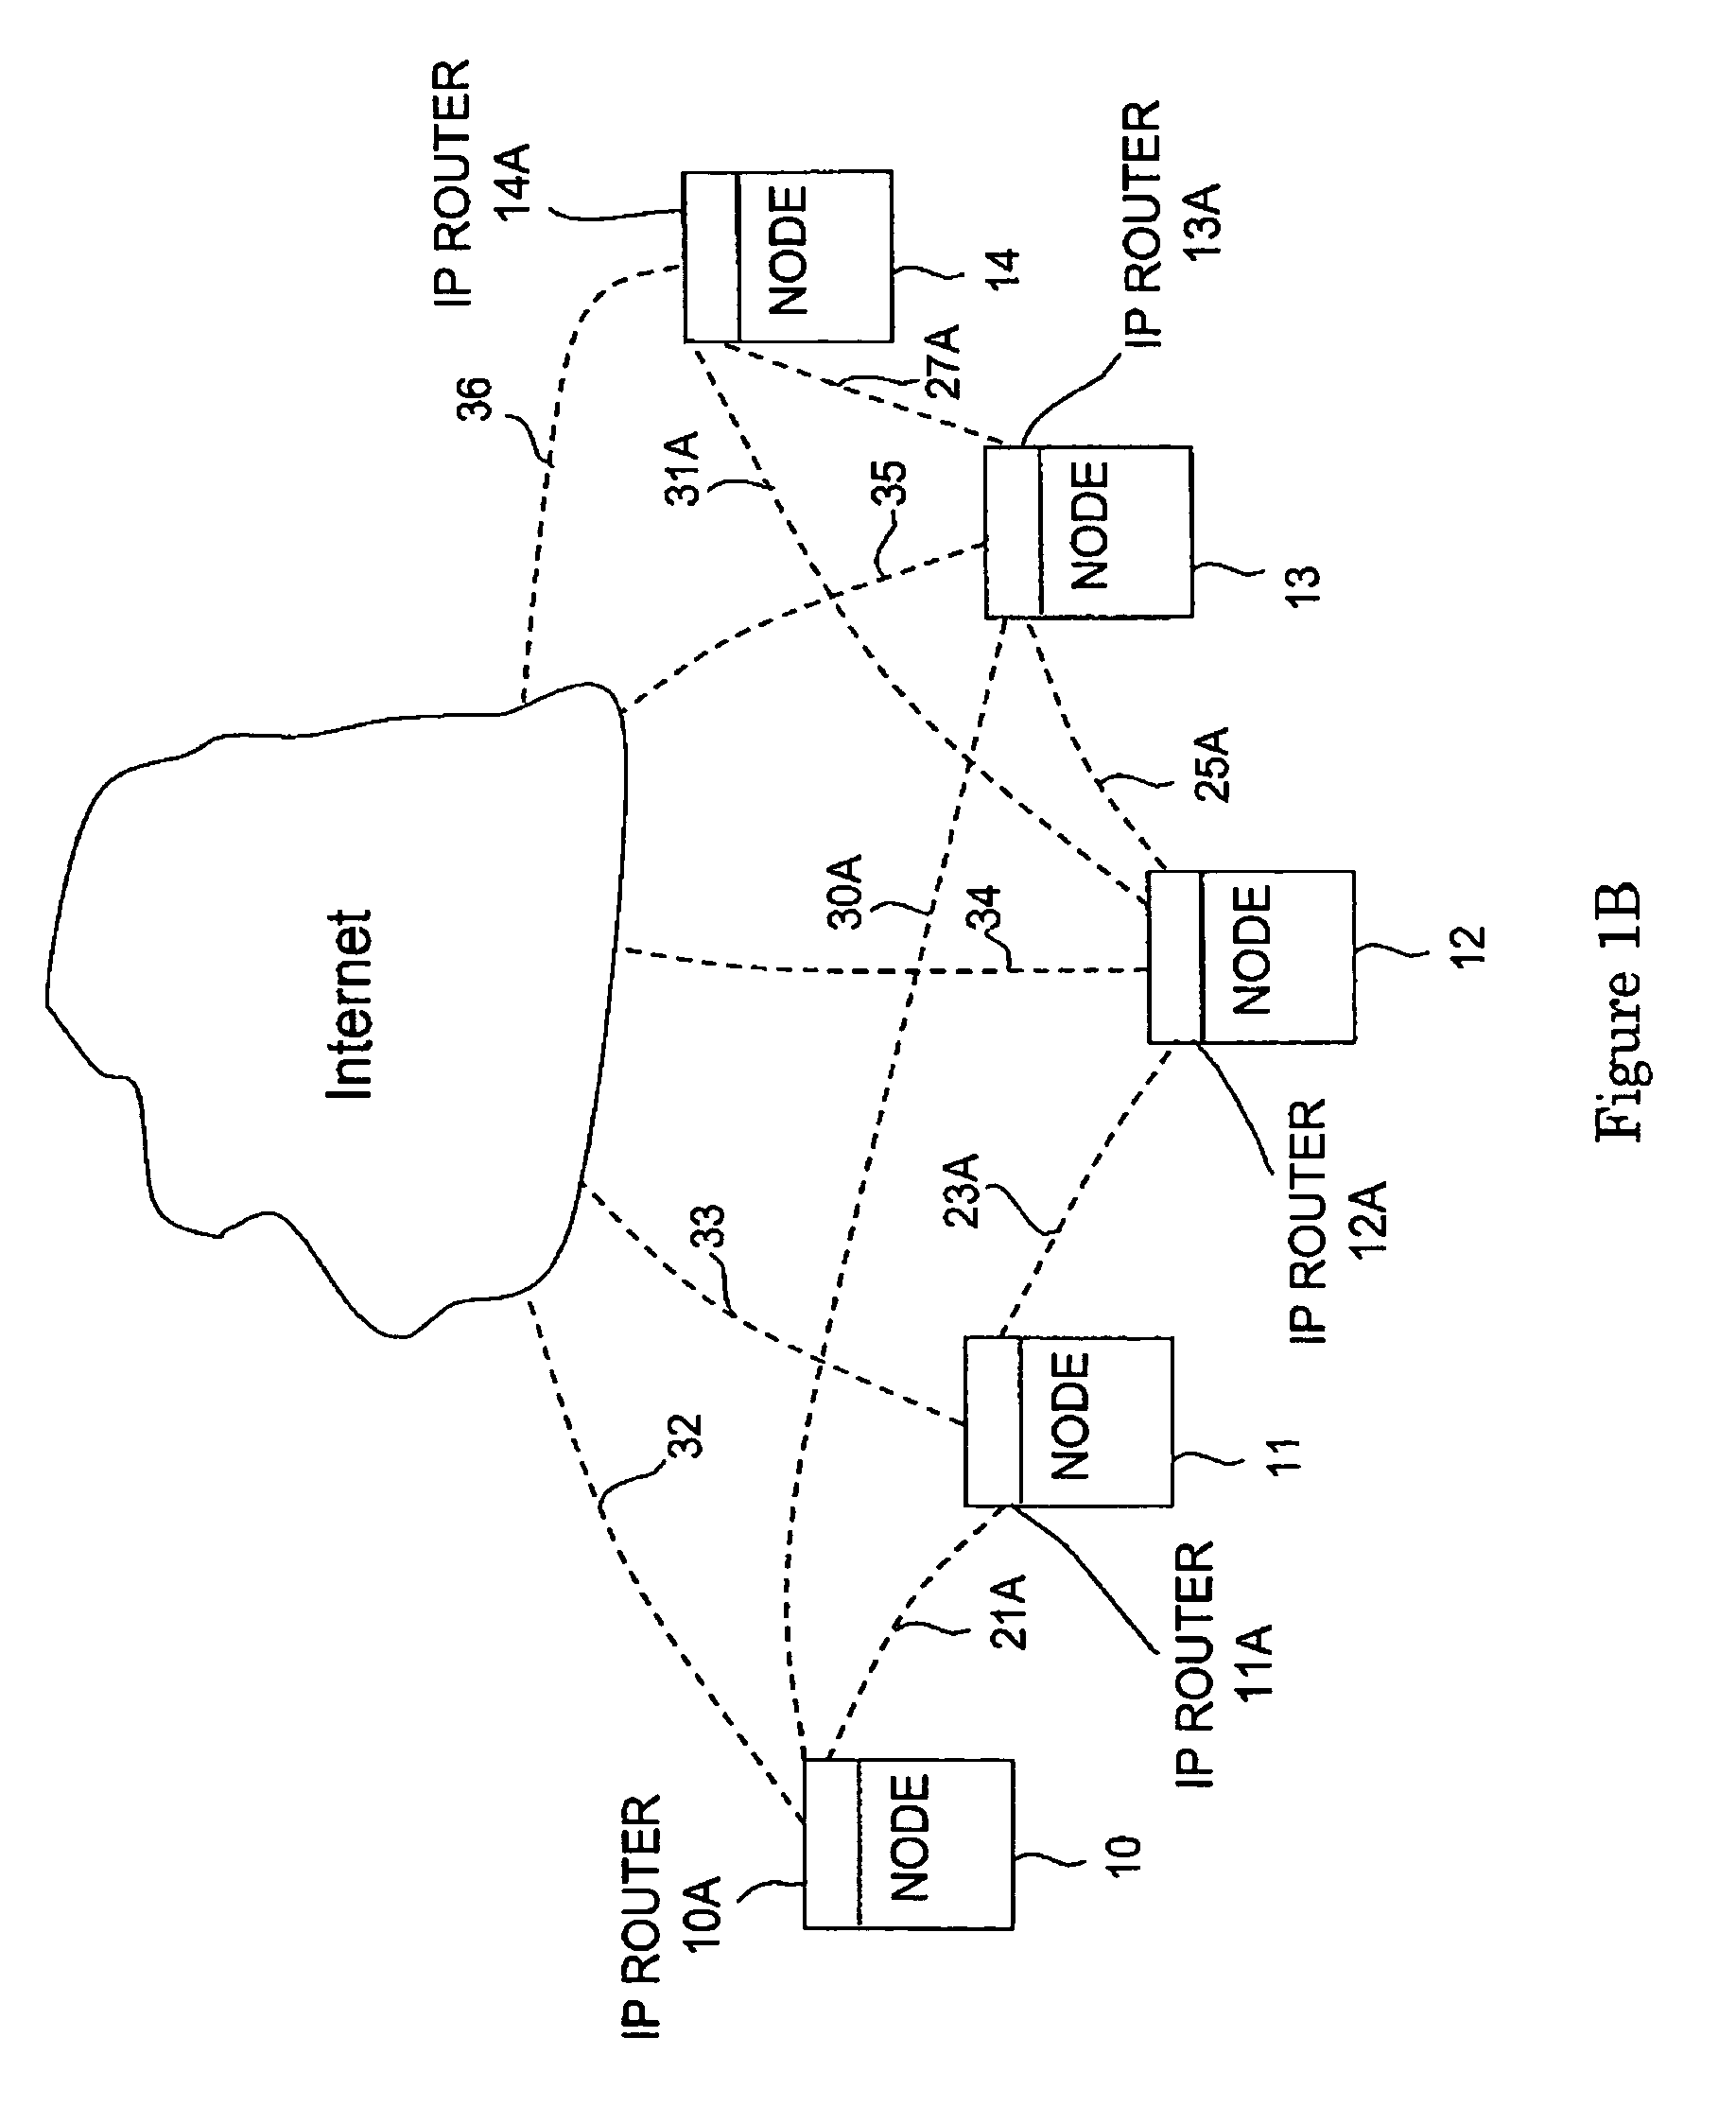 Method for wavelength switch network restoration